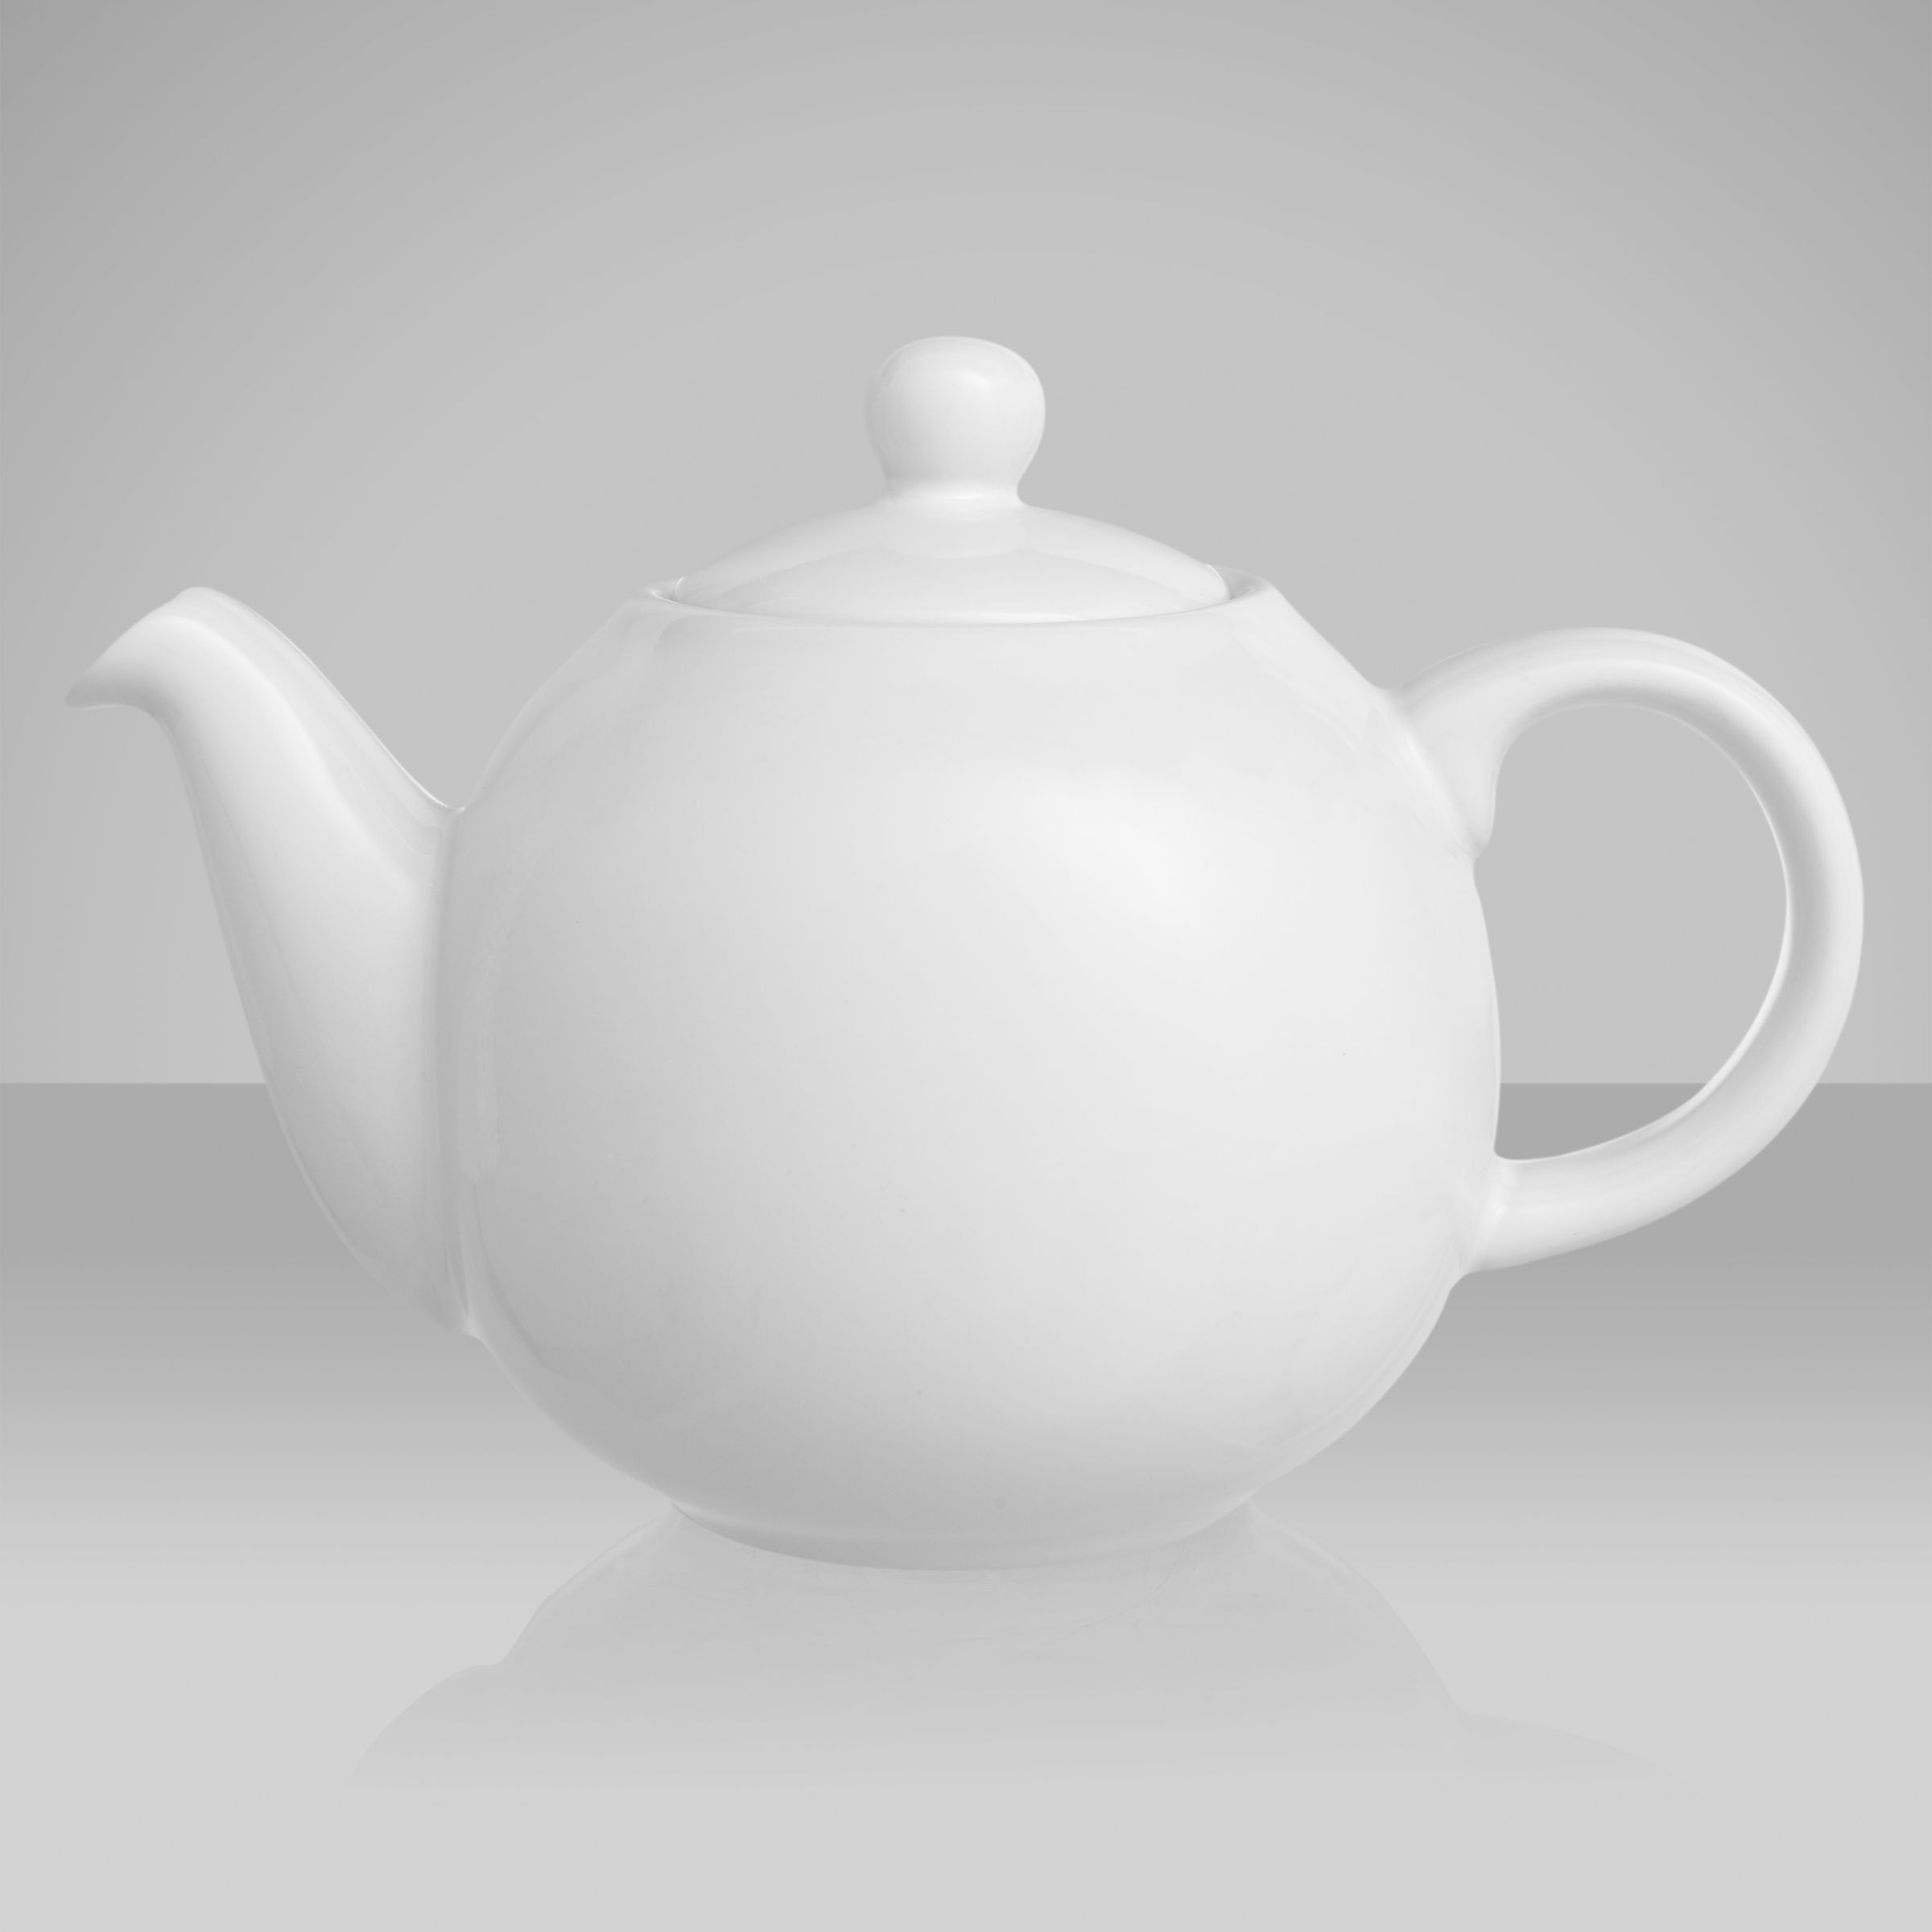 London Pottery Teapot, 4 Cup 36809